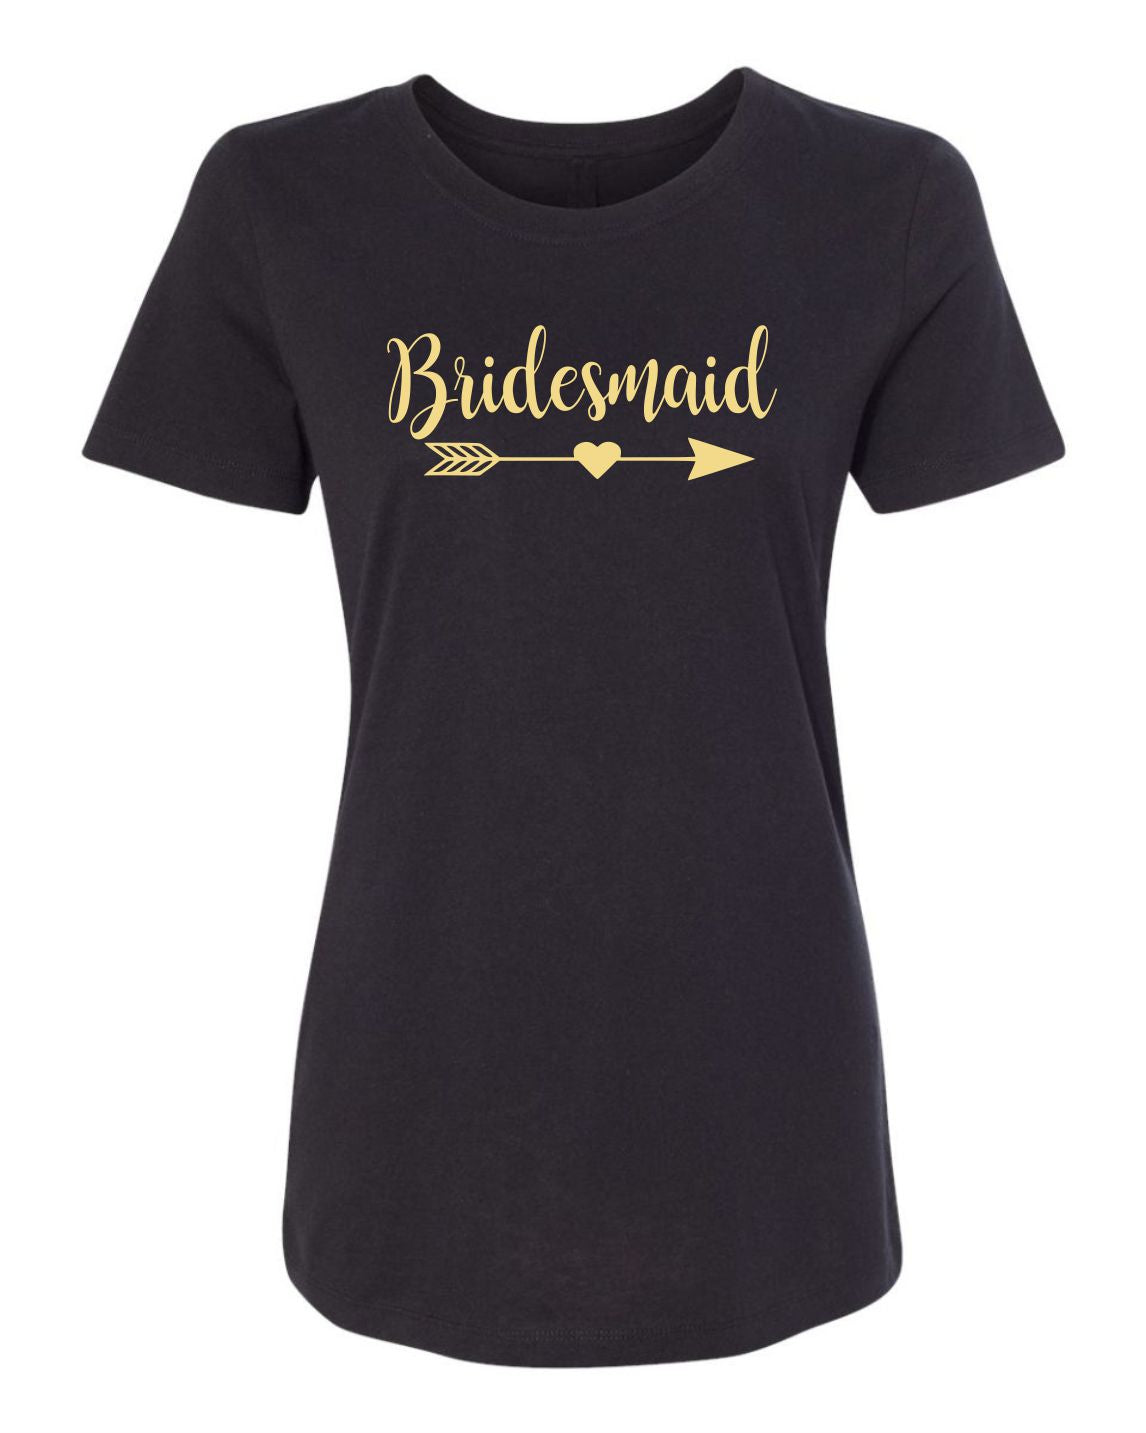 "Bridesmaid" (Arrow Heart Design) T-Shirt